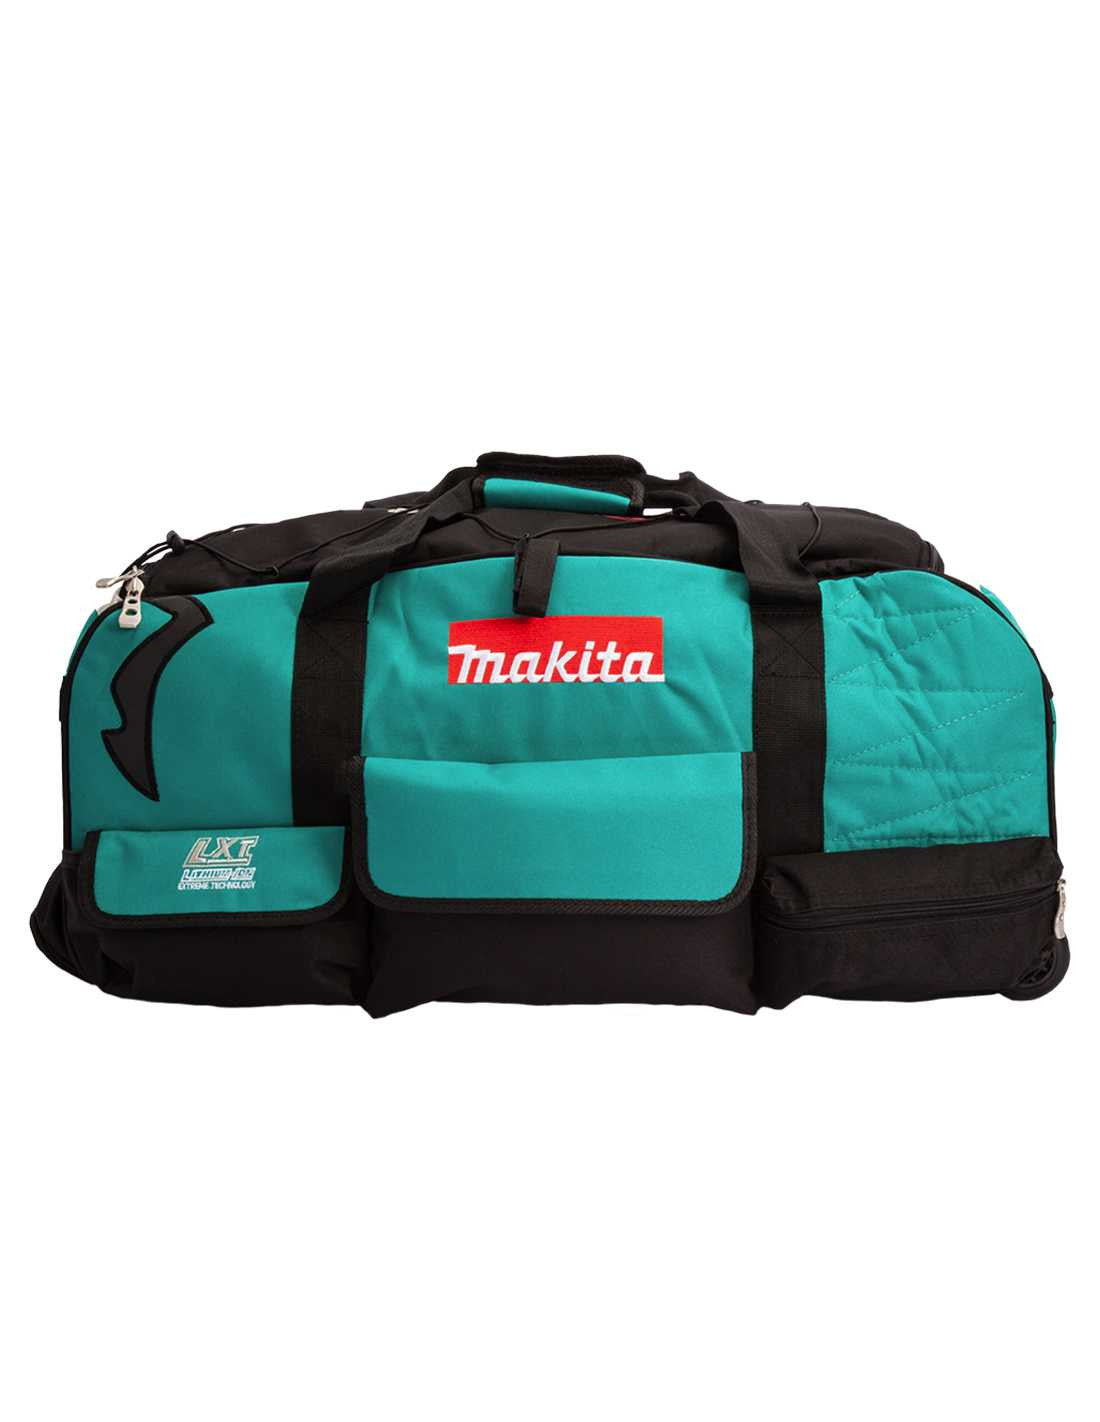 Kit Makita con 7 herramientas + 3bat 5Ah + Cargador DC18RC + 2 bolsas DLX7243BL3